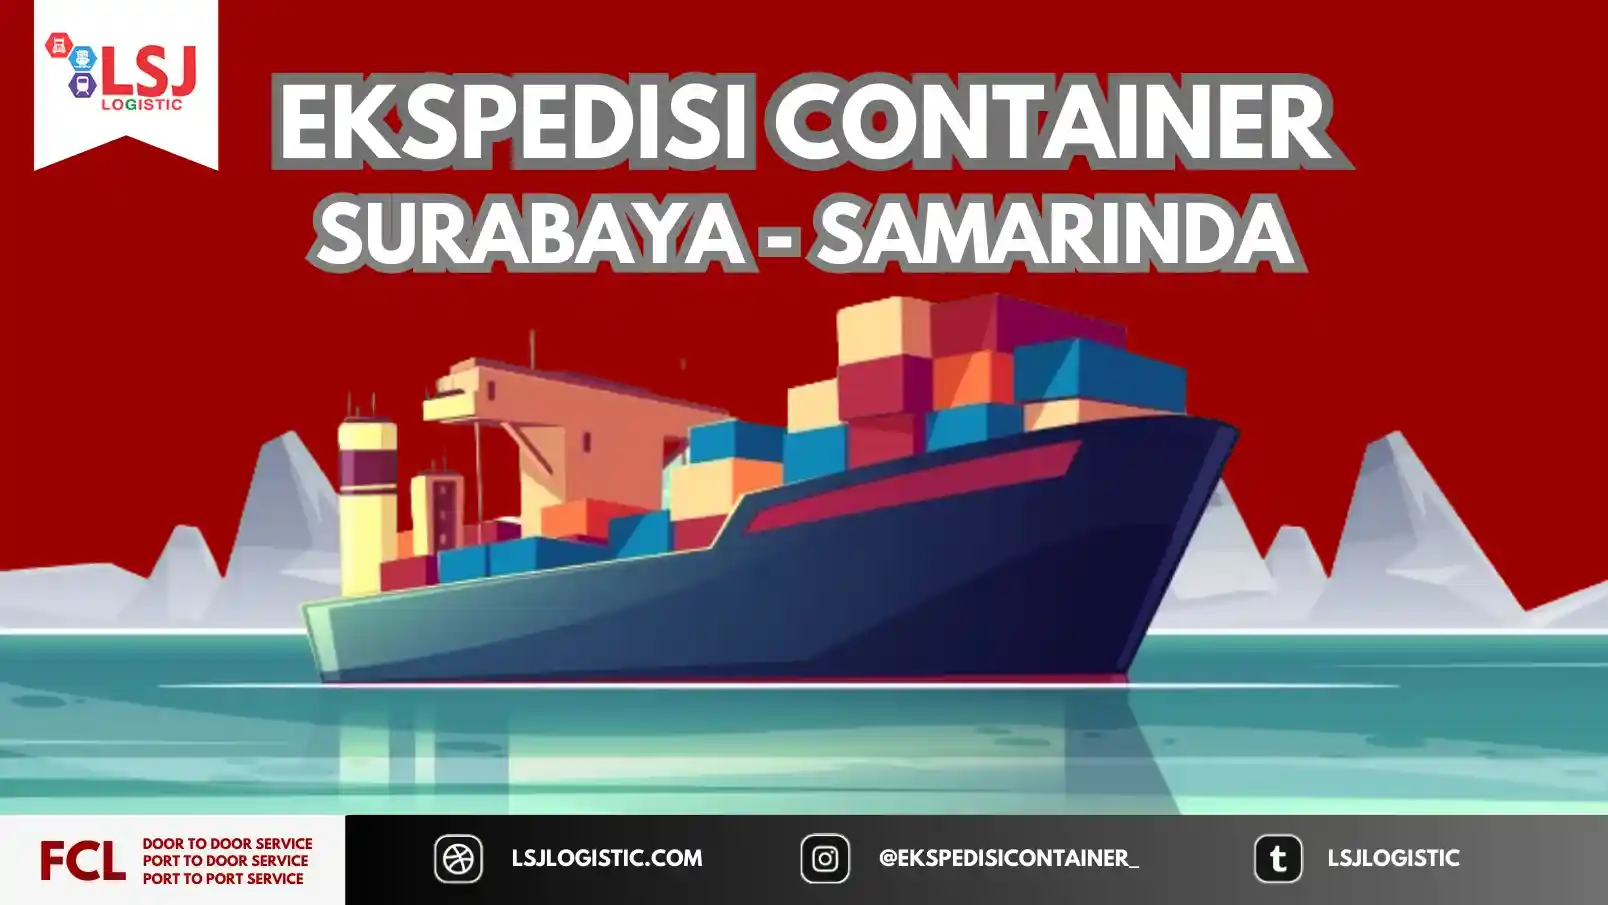 Cargo Container Surabaya Samarinda